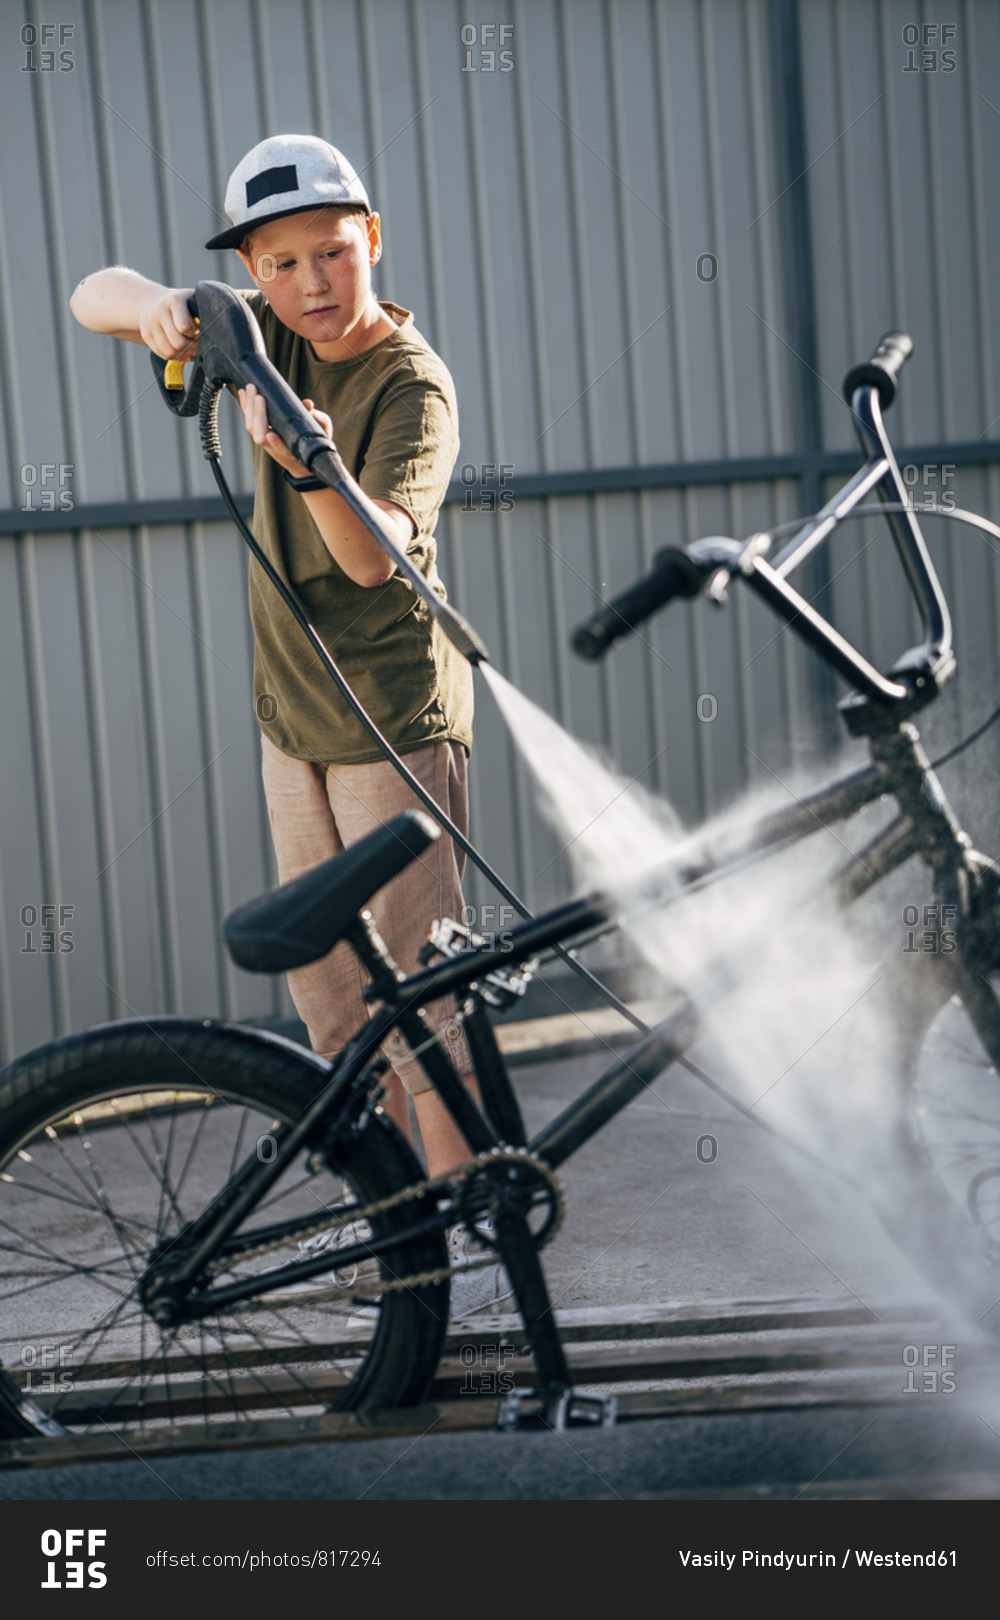 Boy washing bmx bike with pressure washer on yard